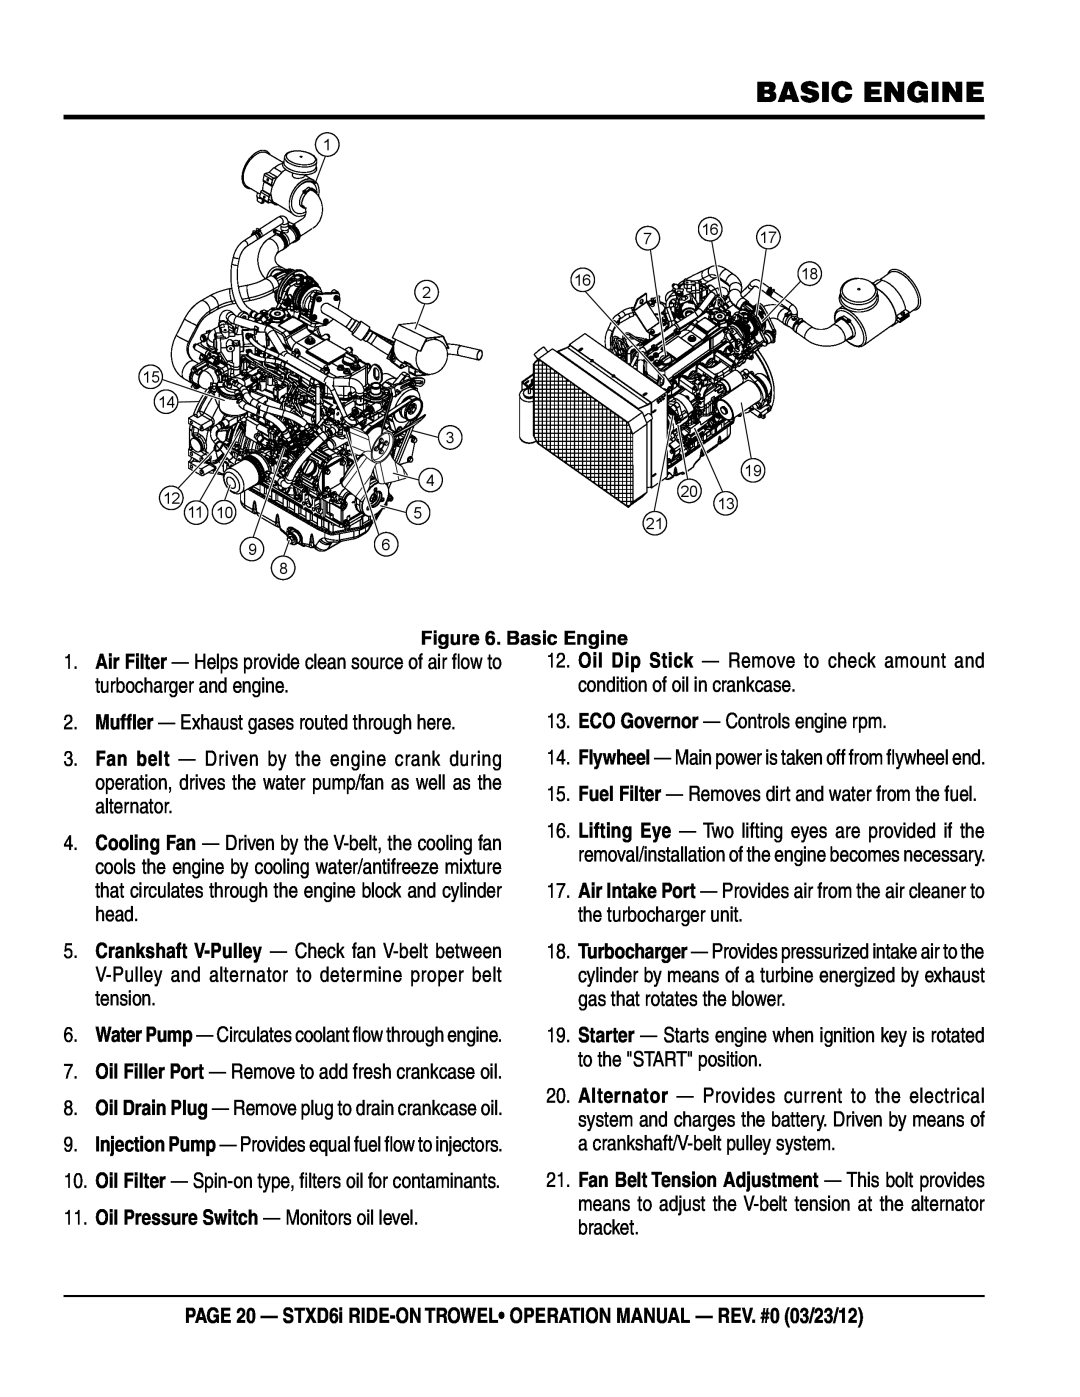 Multiquip STXD6i basic engine, page 20 - stxd6i RIDE-ON TROWEL operation manual - rev. #0 03/23/12 